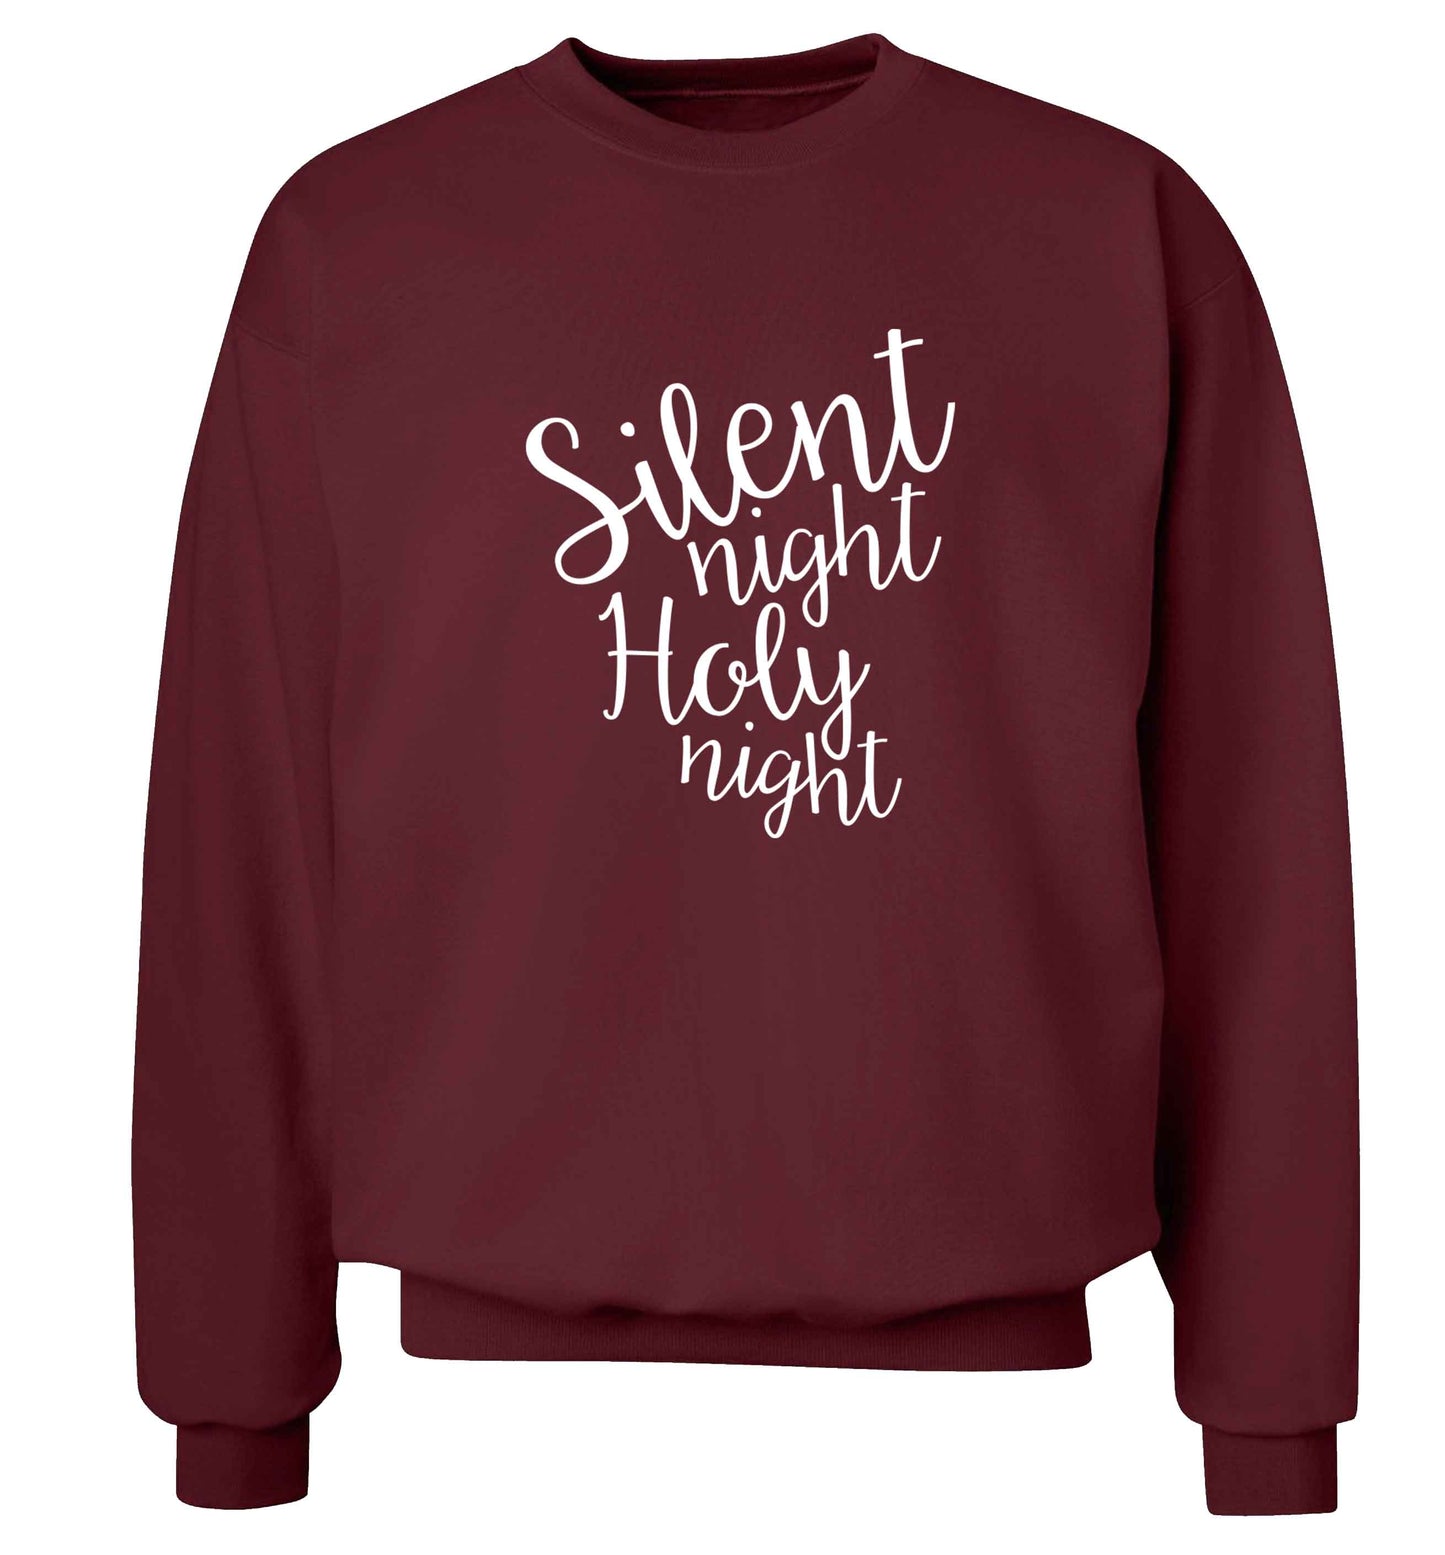 Silent night holy night adult's unisex maroon sweater 2XL